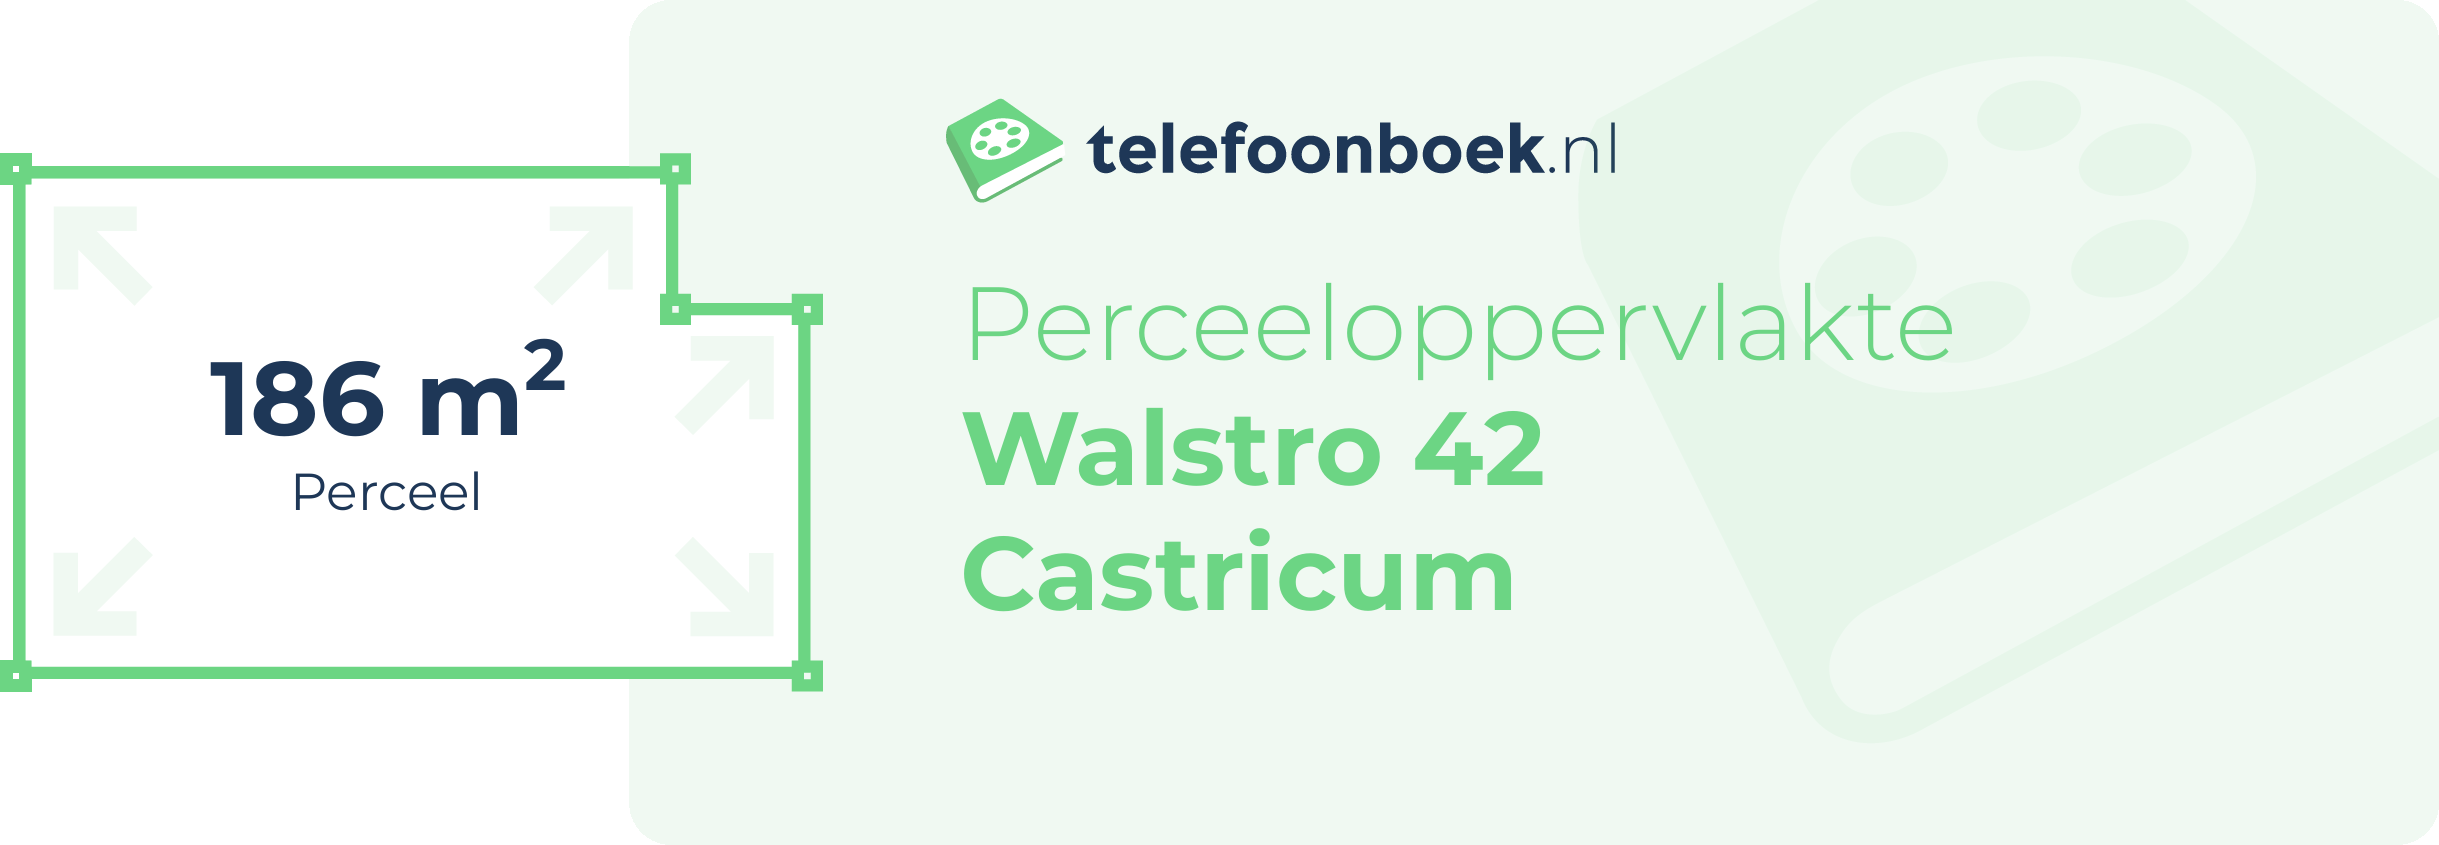 Perceeloppervlakte Walstro 42 Castricum